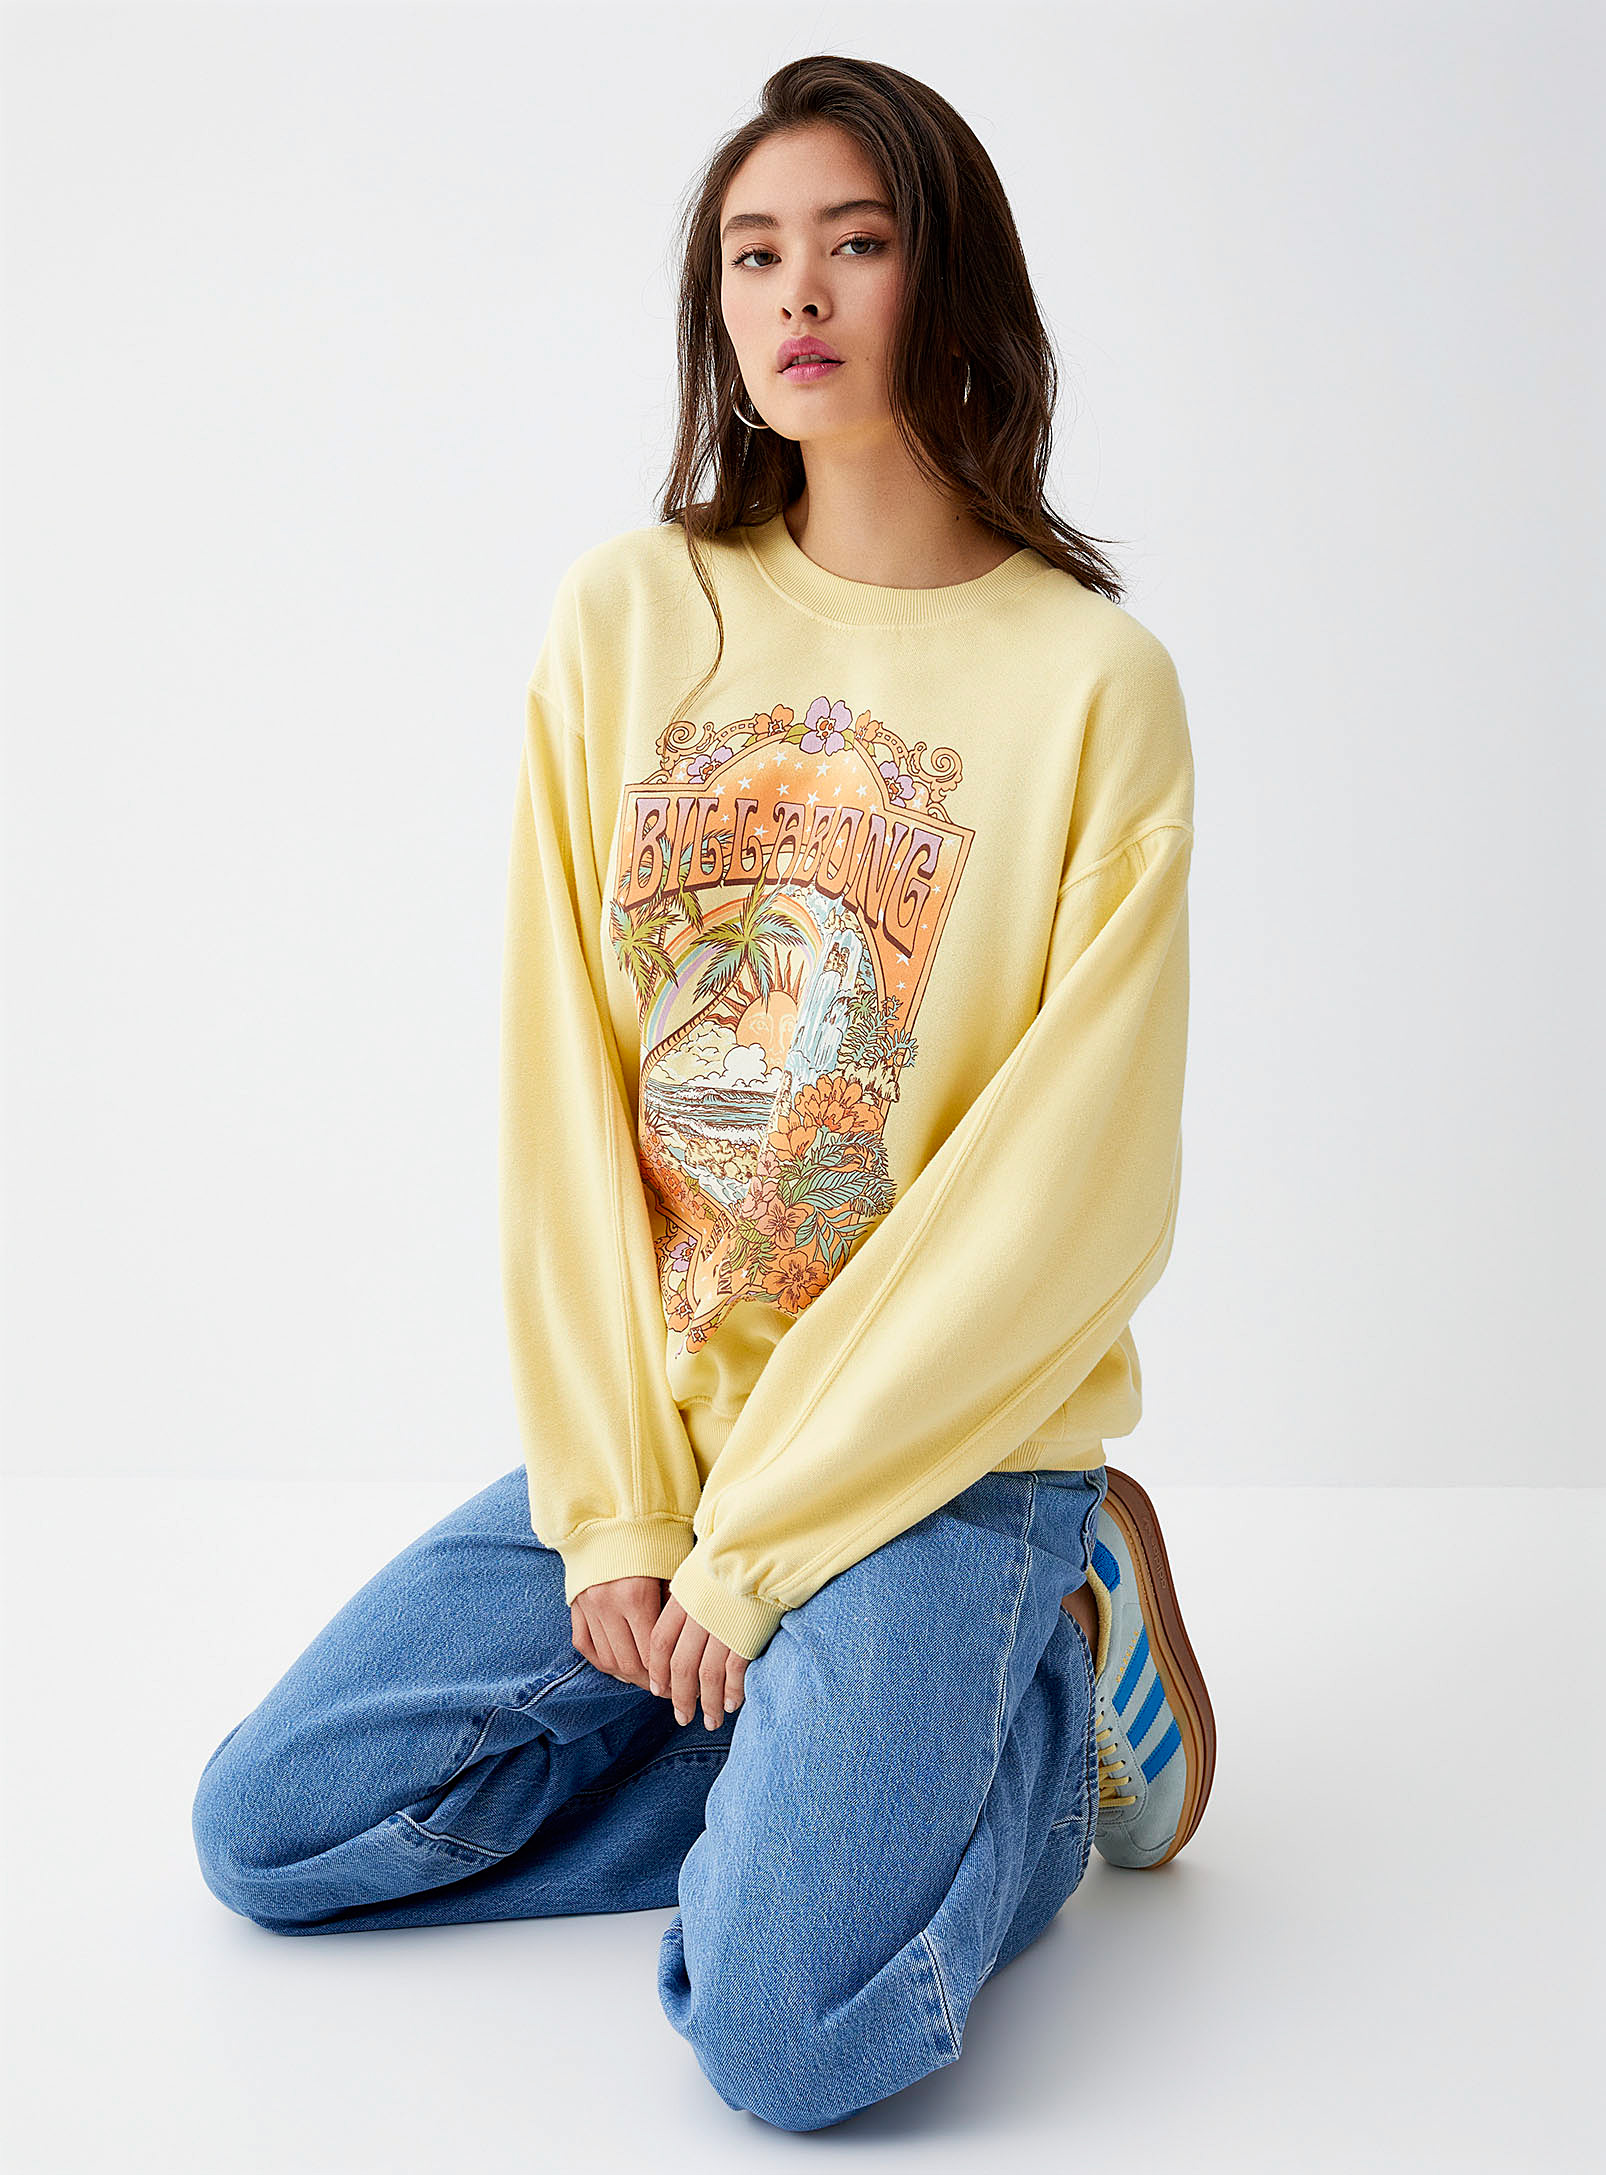 Billabong - Women's Tropical landscape yellow sweatshirt